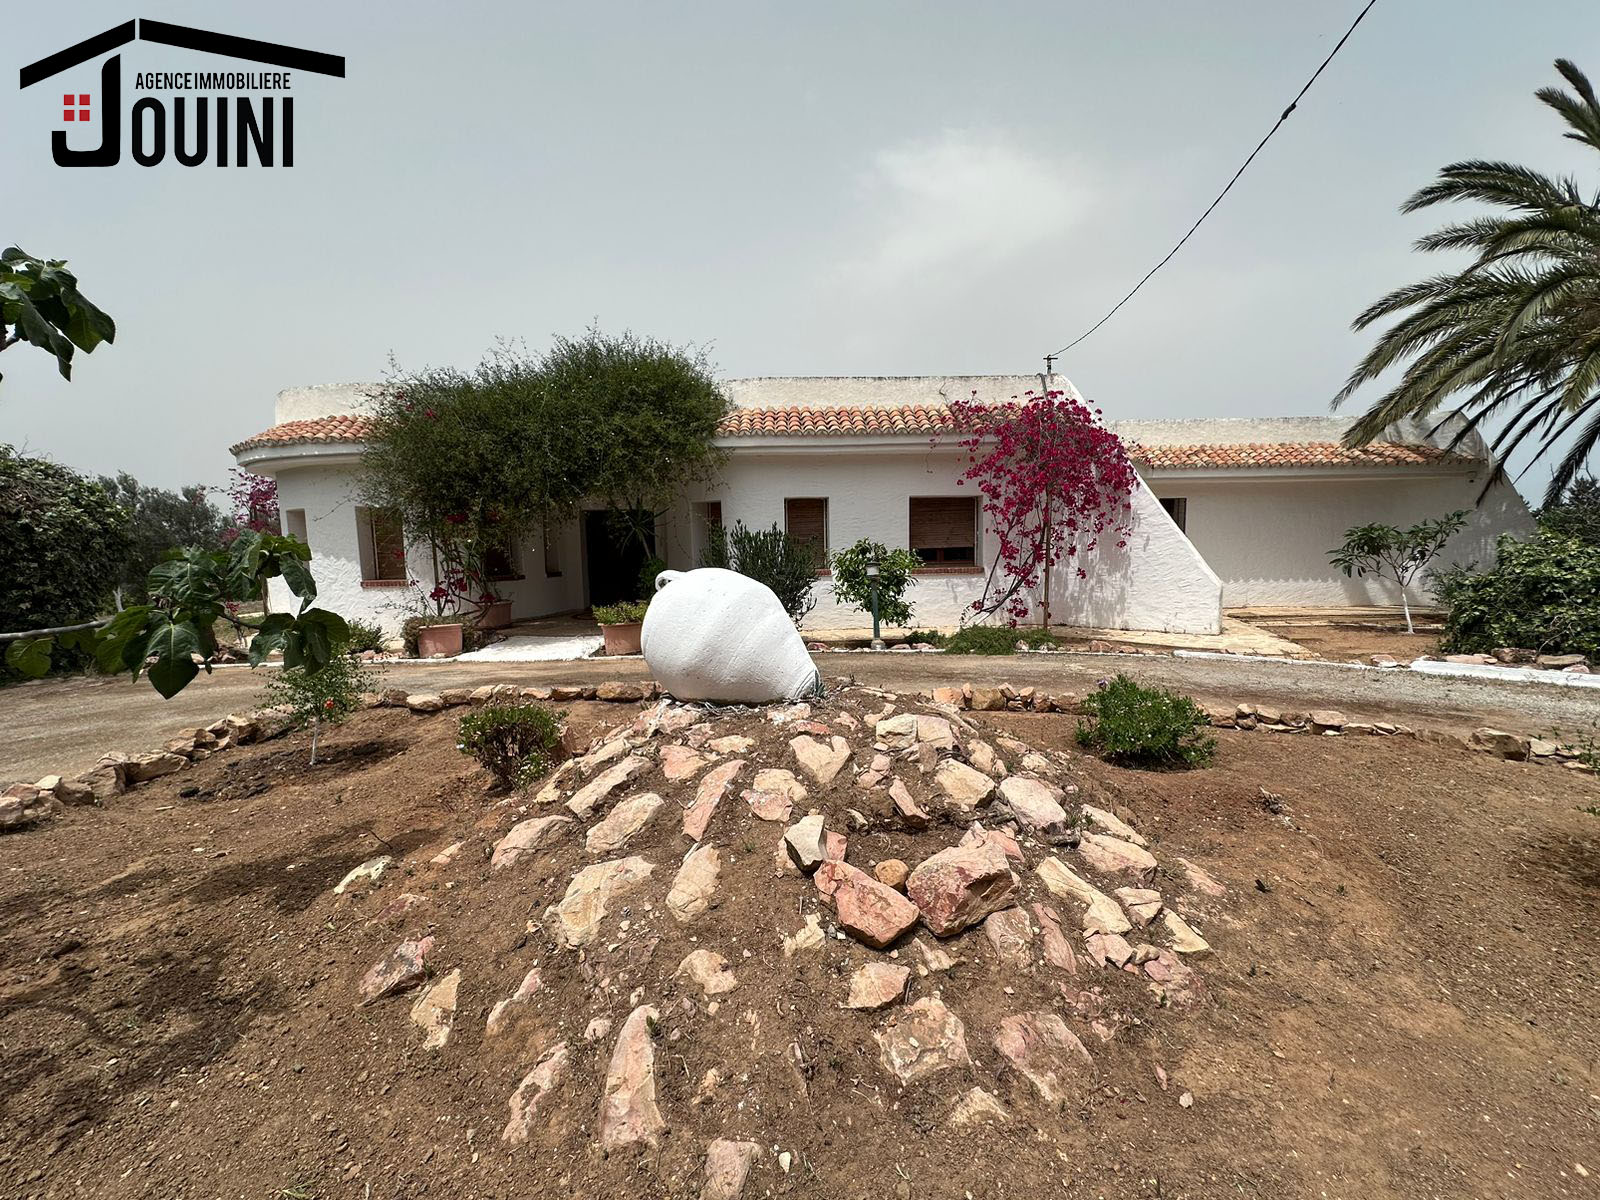 Sidi Thabet Sidi Thabet Vente Maisons Villa de compagne a sidi thabet ariana